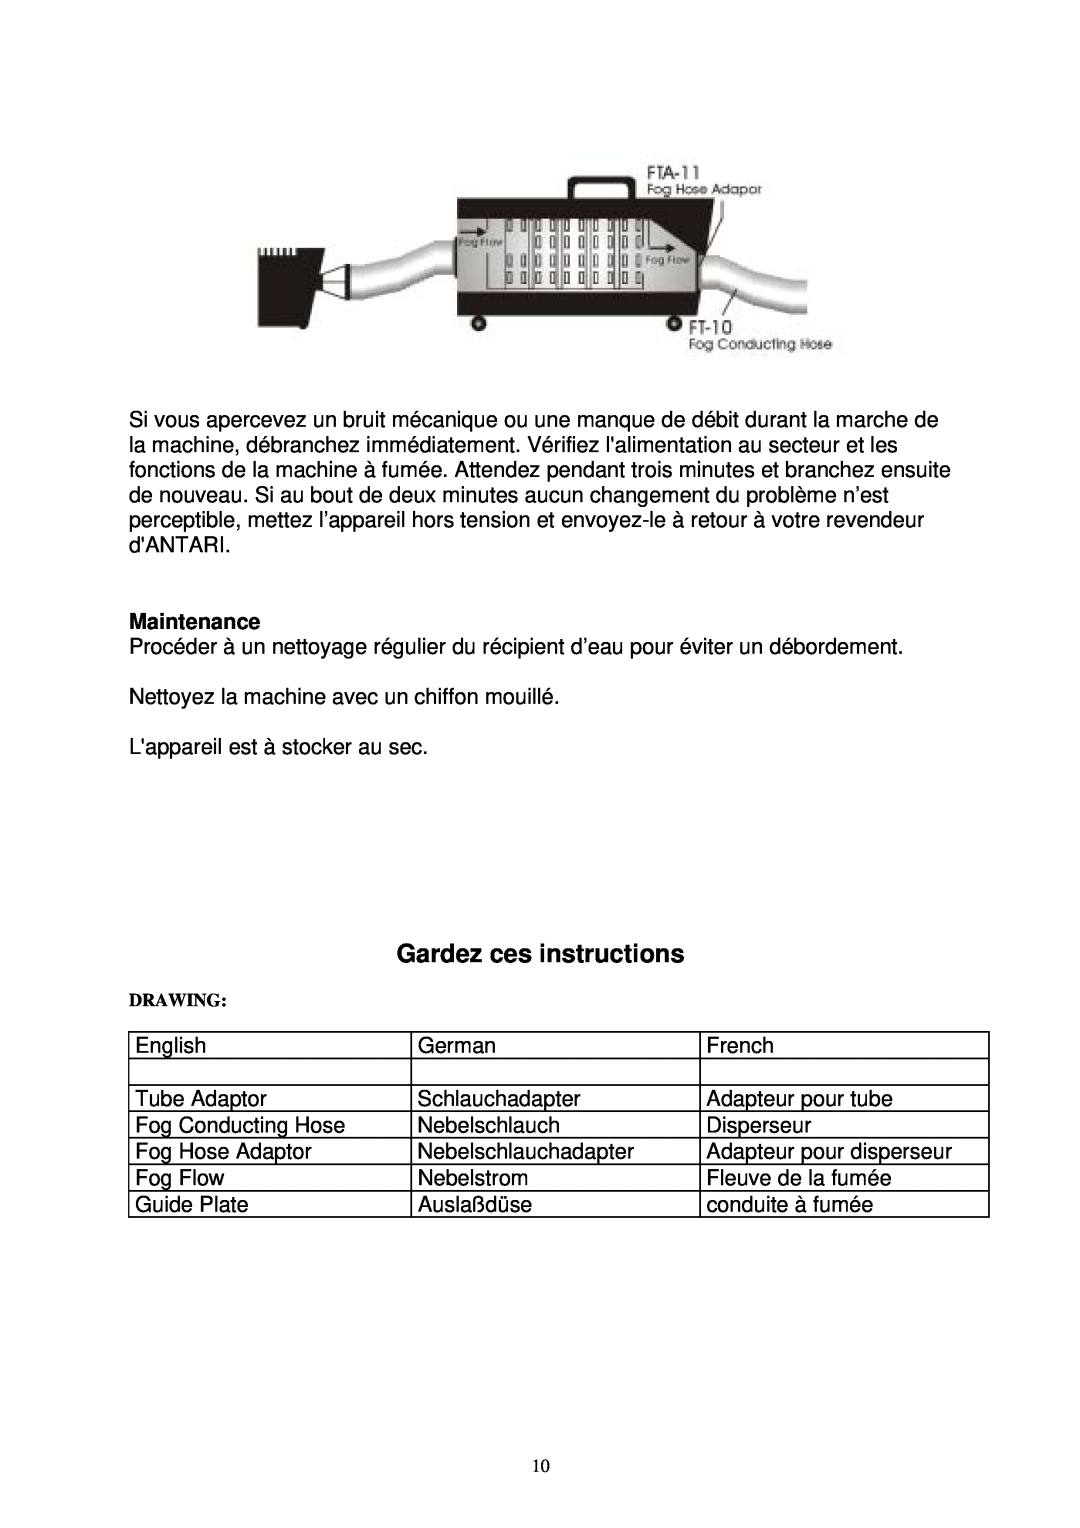 Antari Lighting and Effects DNG-100 user manual Gardez ces instructions, Maintenance 